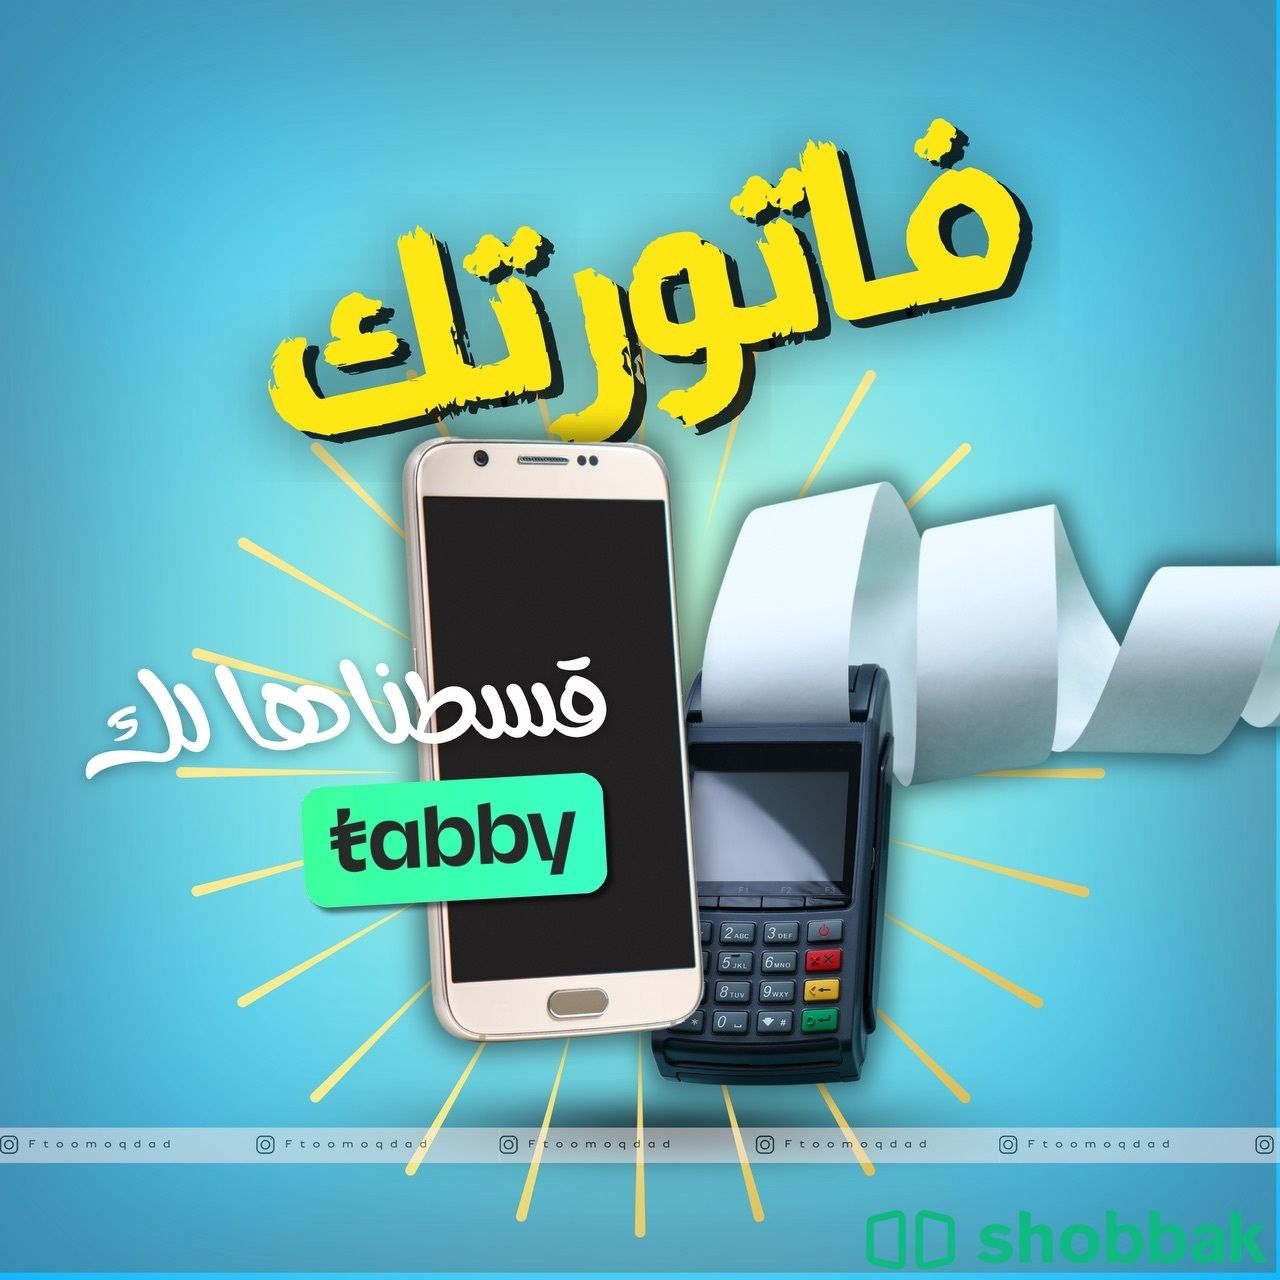 اصمم بوستات للسوشل ميديا  ( فيديو / صوره) Shobbak Saudi Arabia